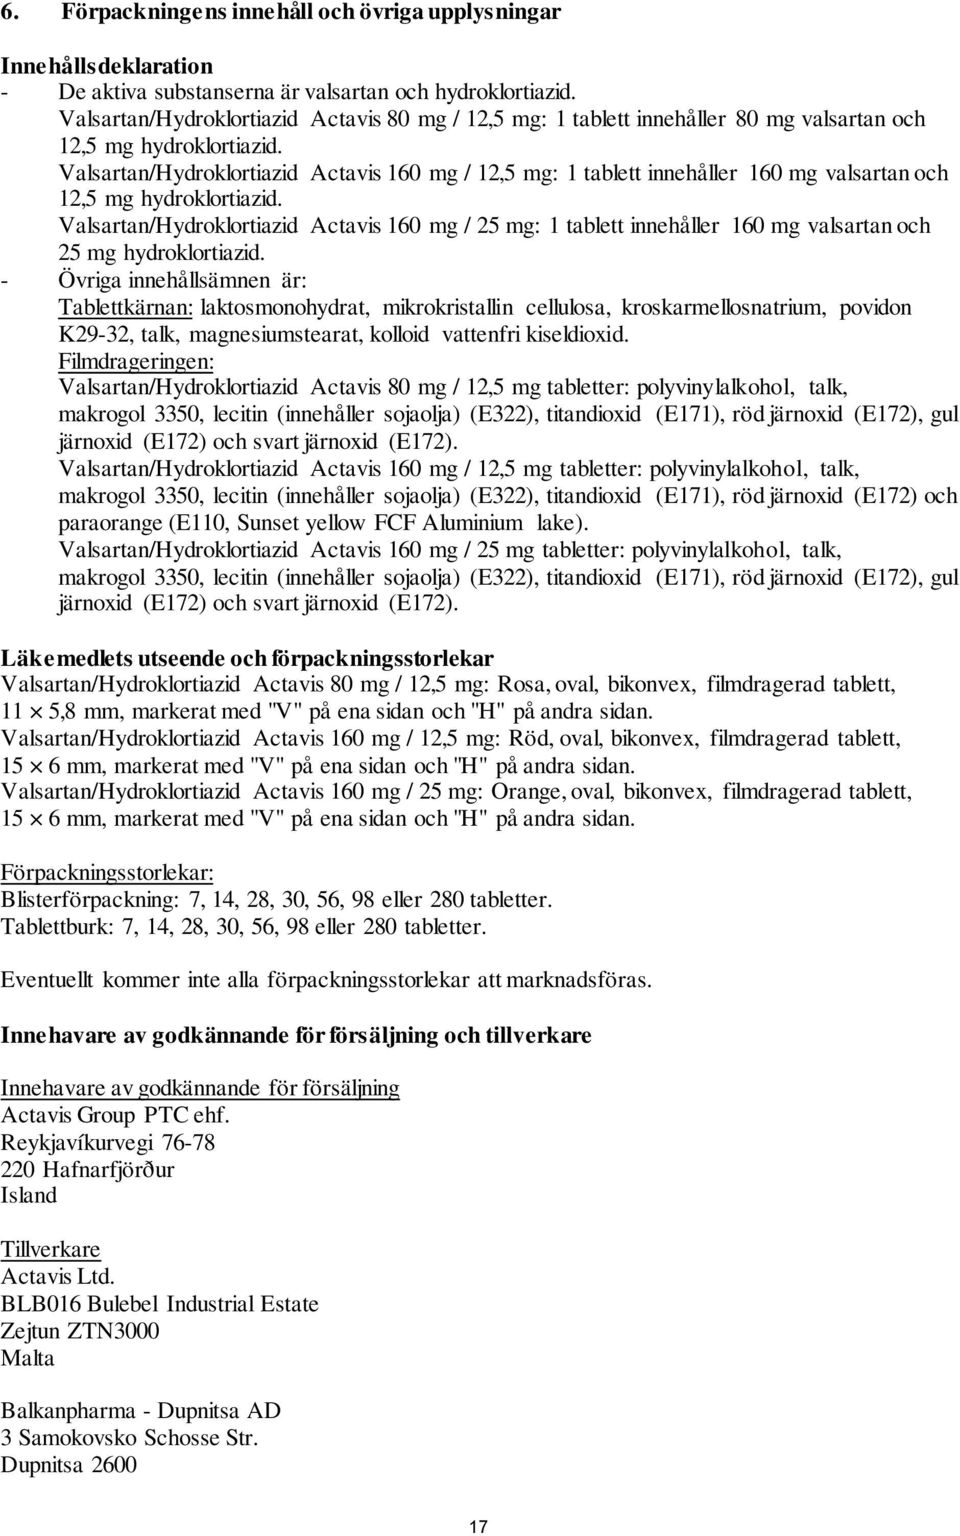 Valsartan/Hydroklortiazid Actavis 160 mg / 12,5 mg: 1 tablett innehåller 160 mg valsartan och 12,5 mg hydroklortiazid.